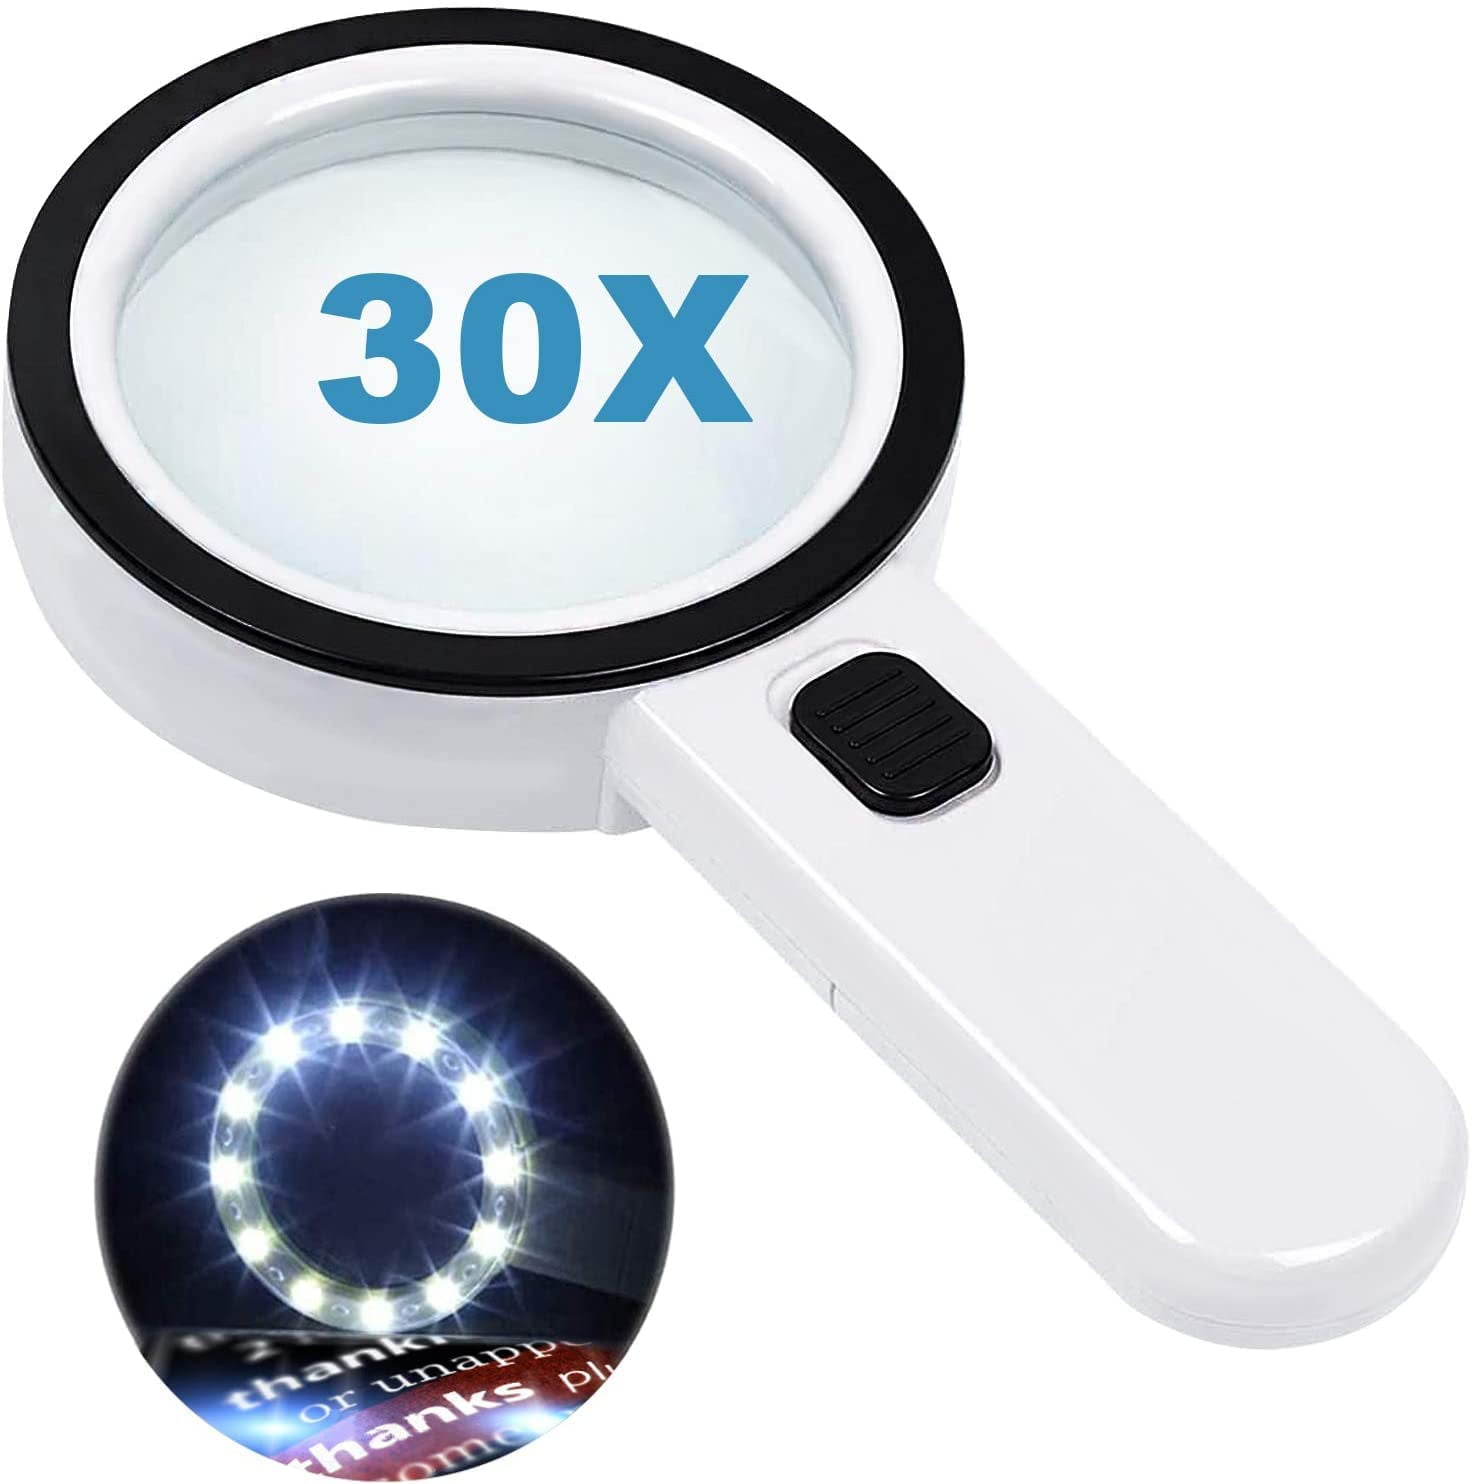 ExploreOne LED Lighted Magnifying Glass - 88-29501